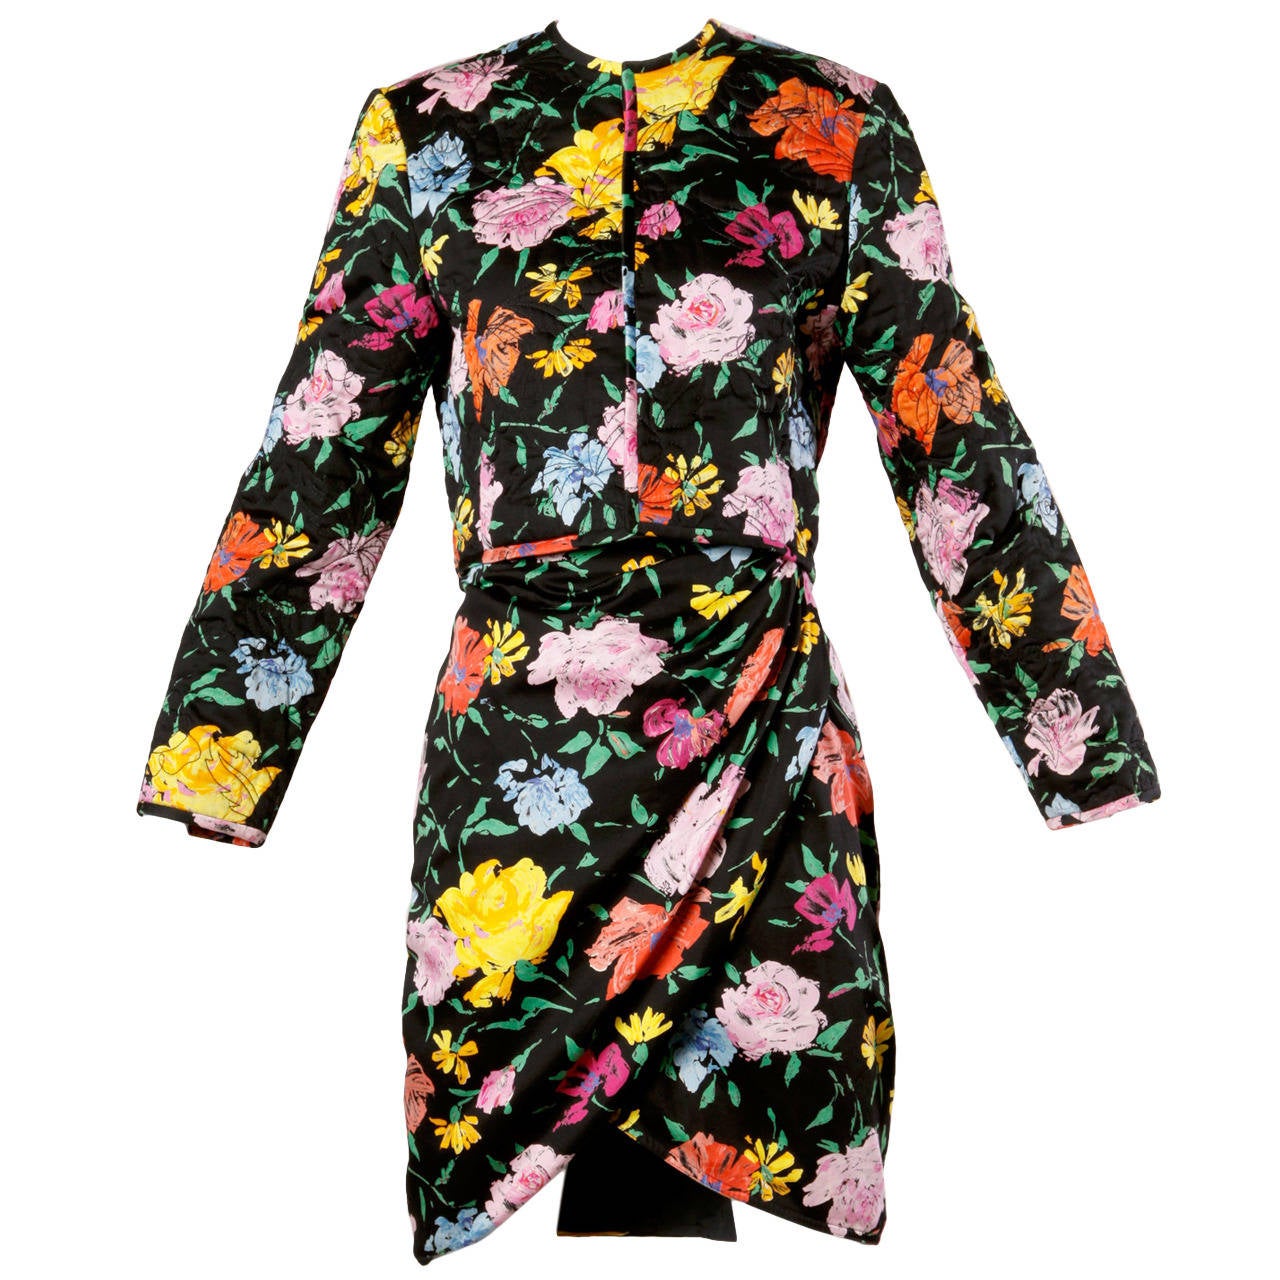 Emanuel Ungaro Vintage Floral Print Quilted Jacket + Skirt Suit Ensemble